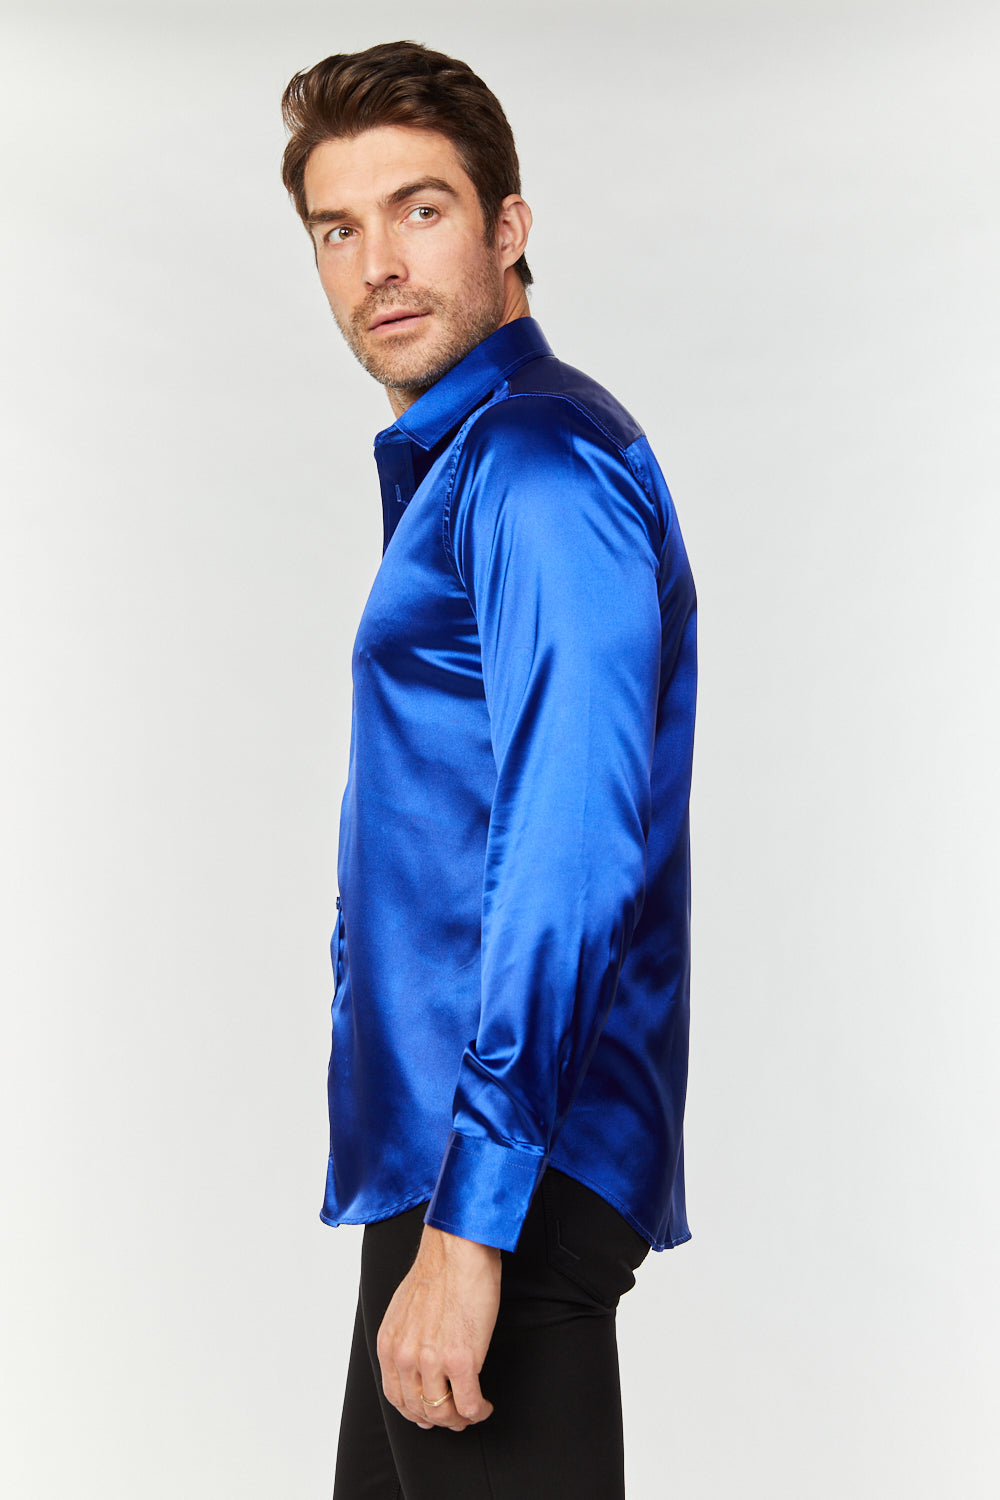 Men's Satin Royal Blue Dress Shirt